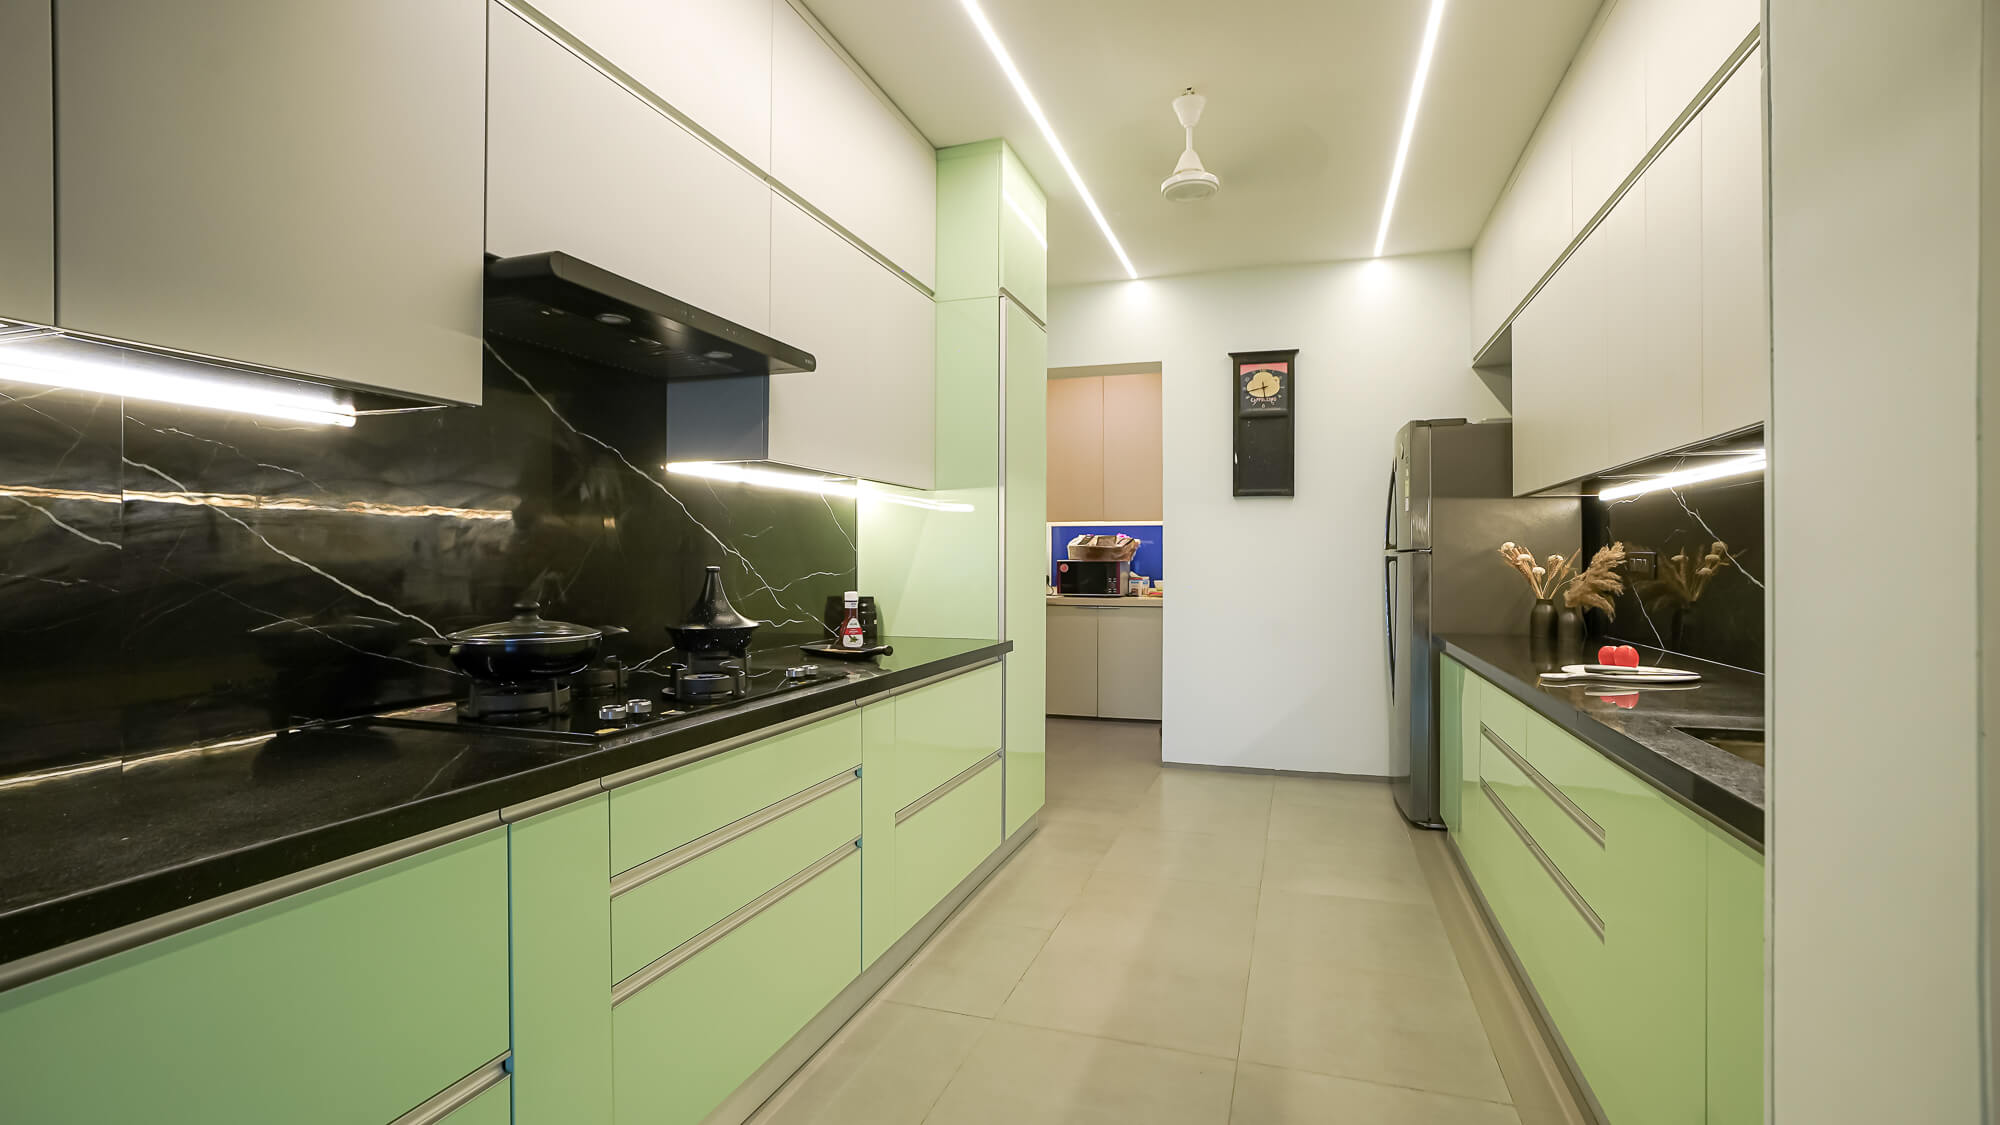 Farah Khan’s new kitchen